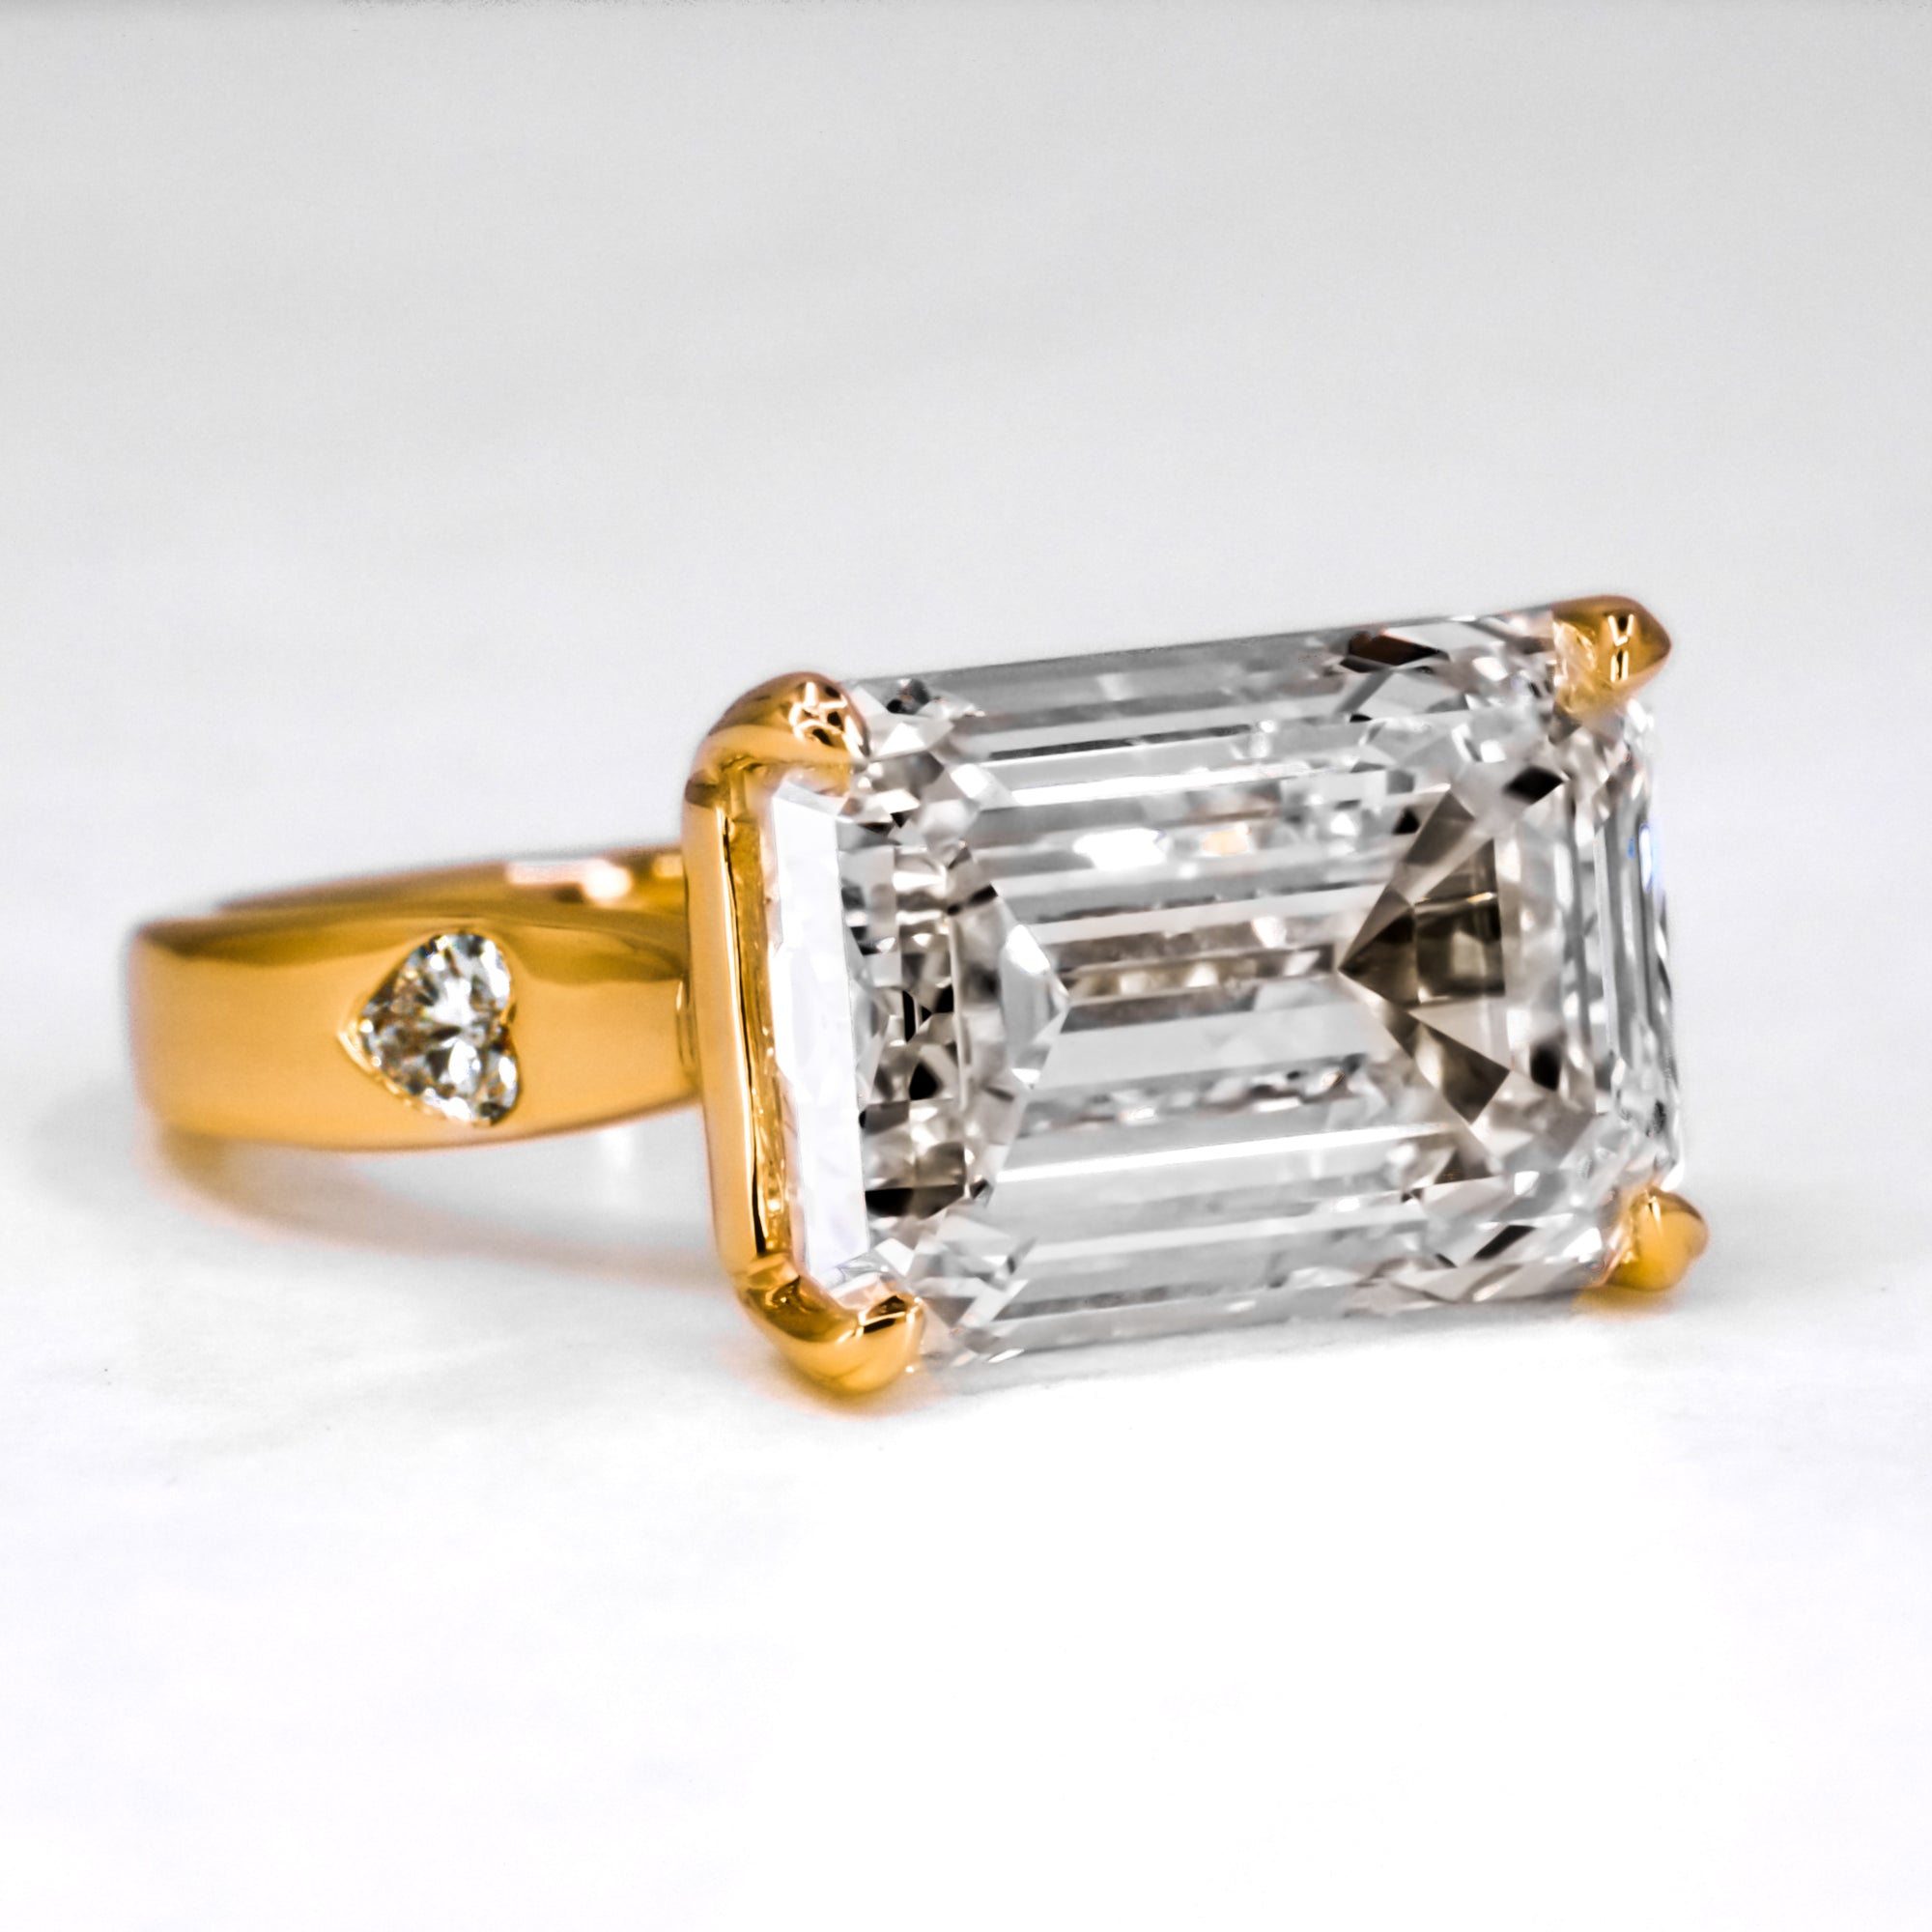 The Diamond Era Ring